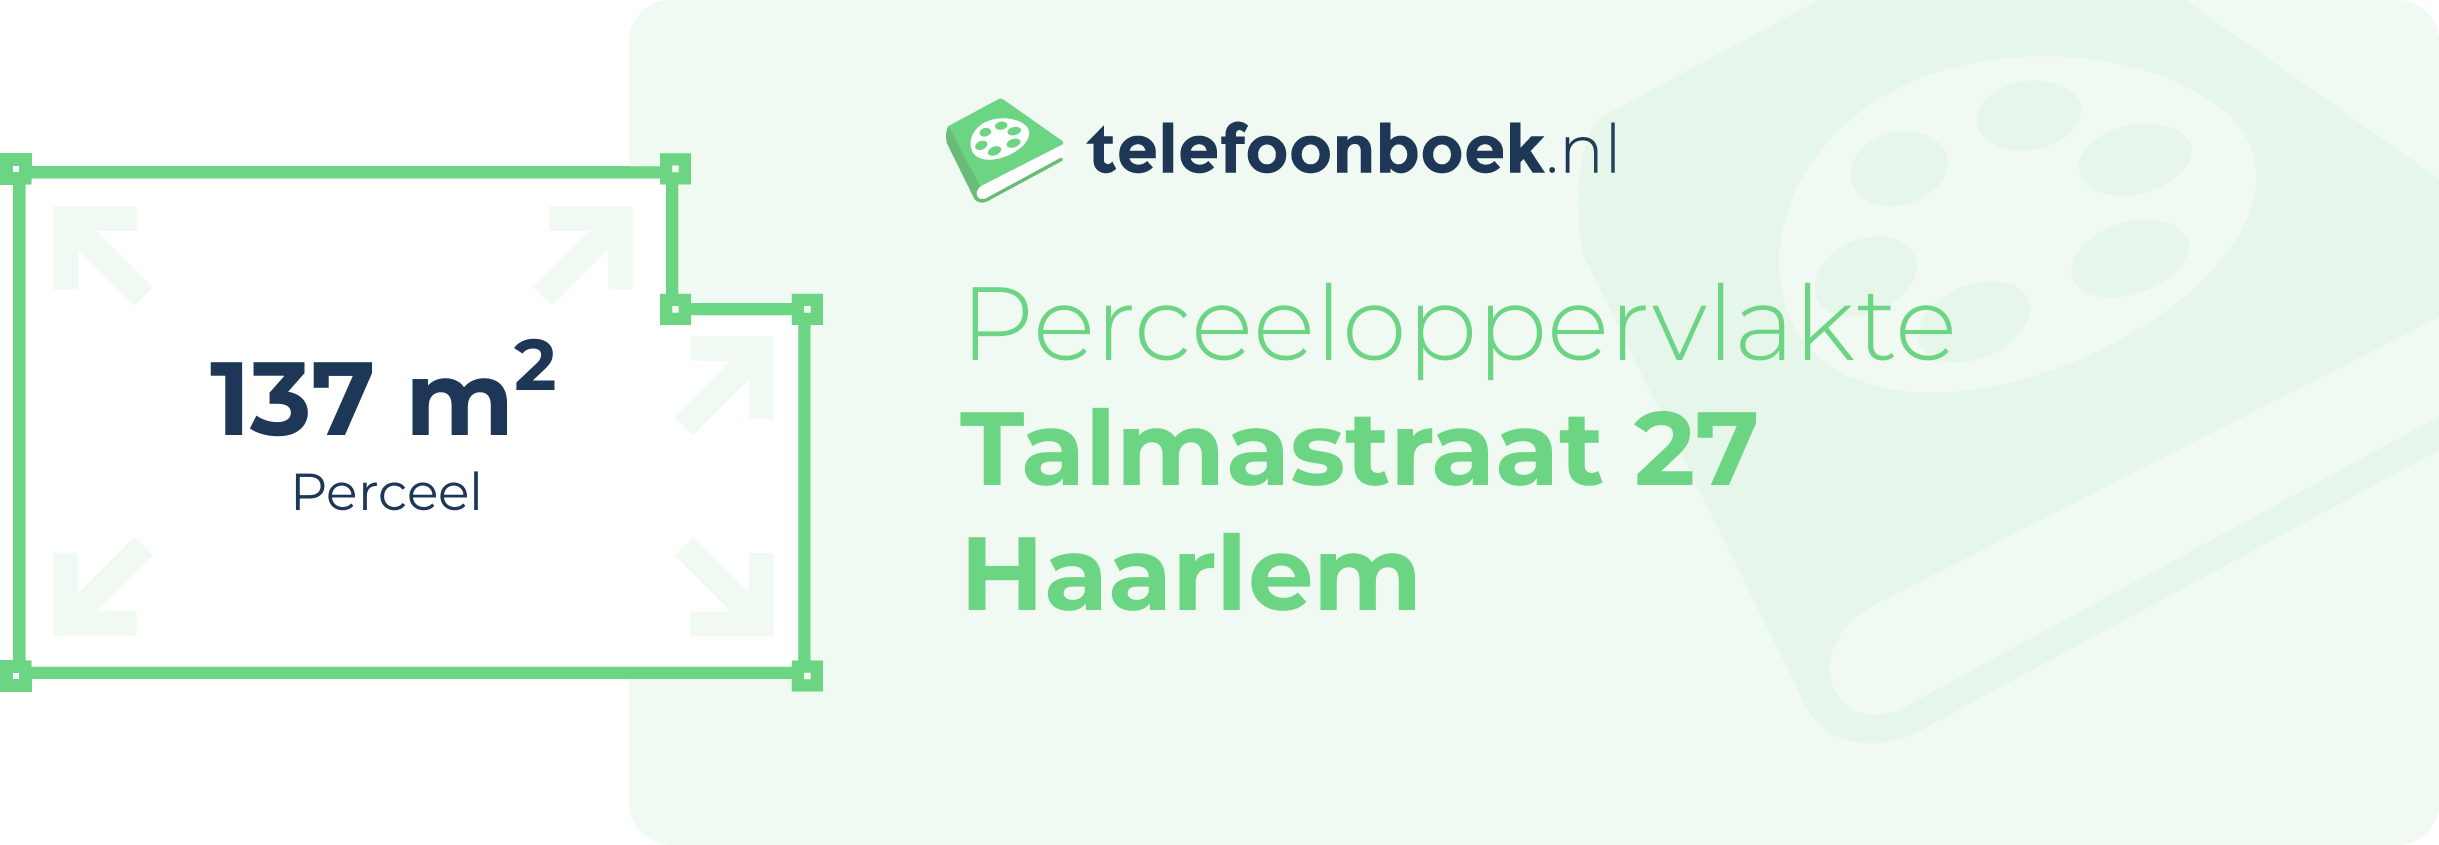 Perceeloppervlakte Talmastraat 27 Haarlem